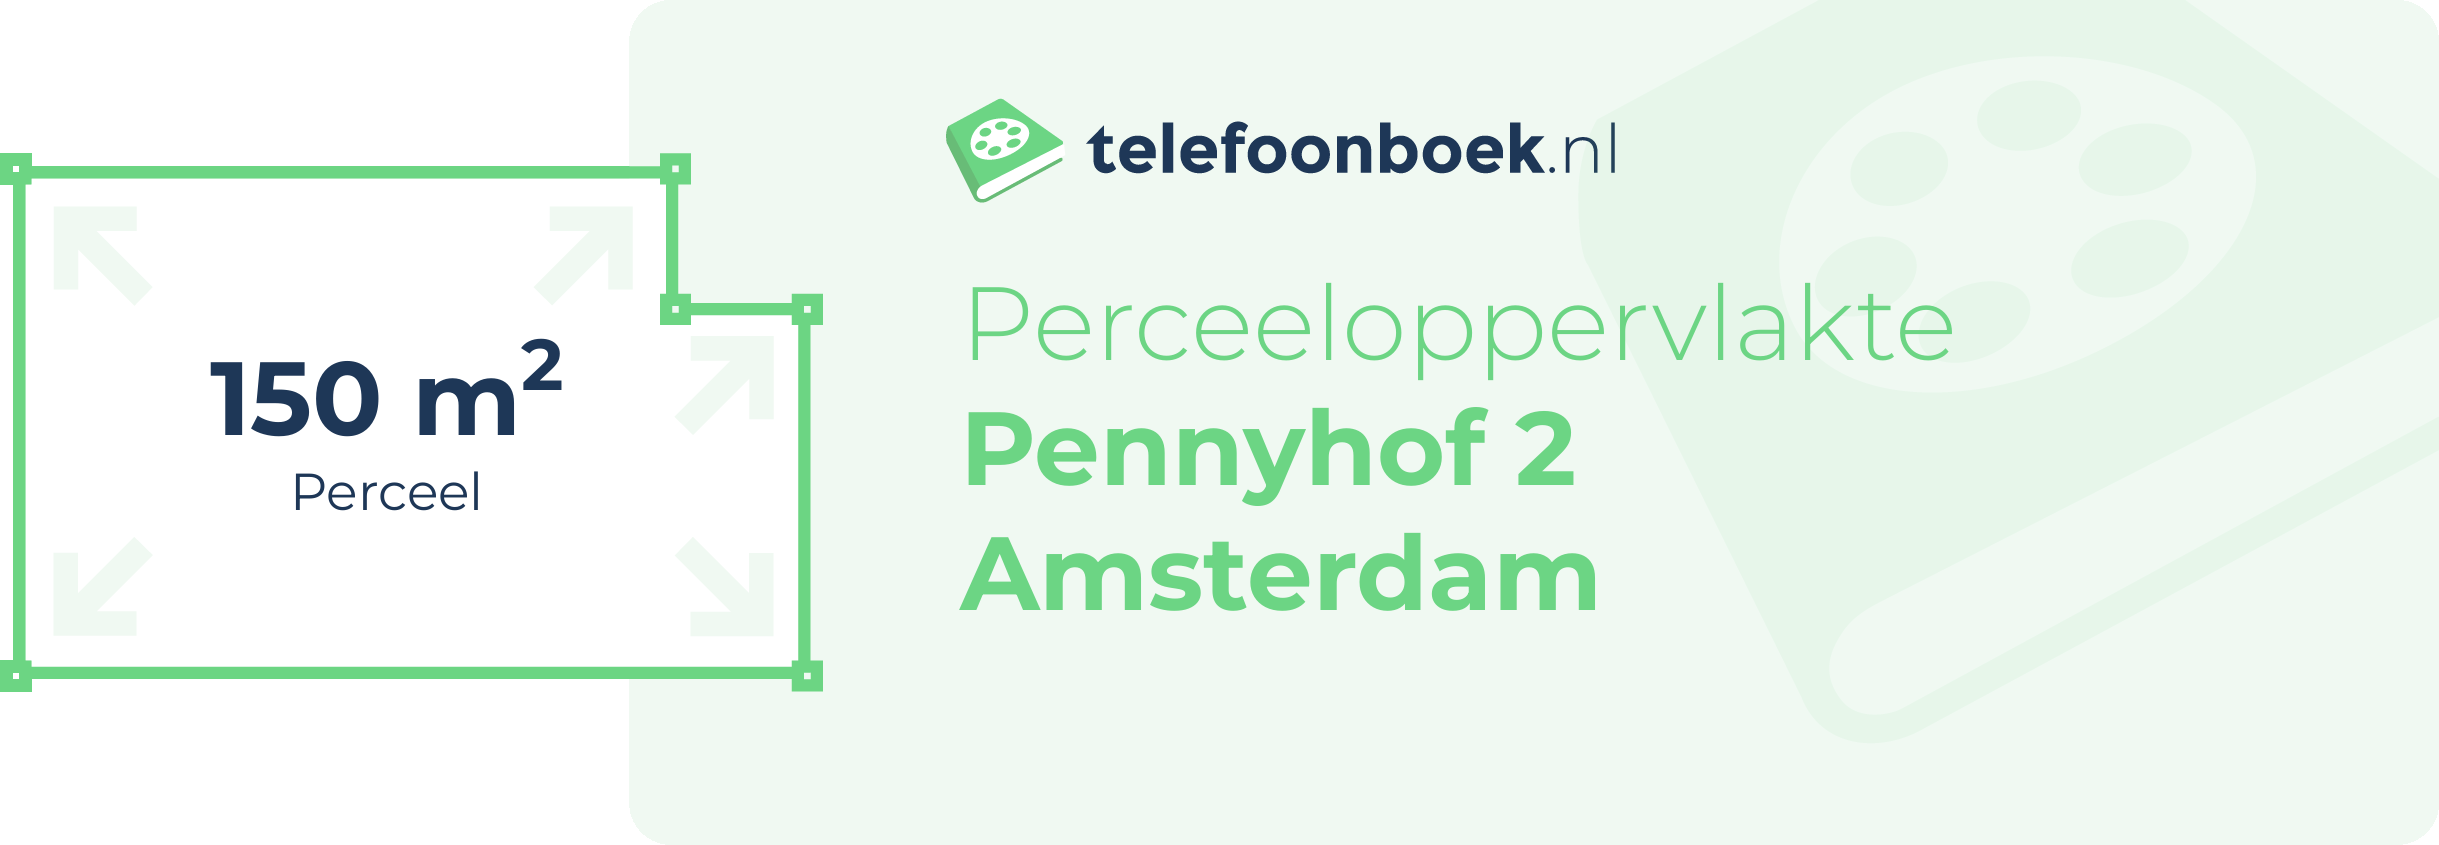 Perceeloppervlakte Pennyhof 2 Amsterdam